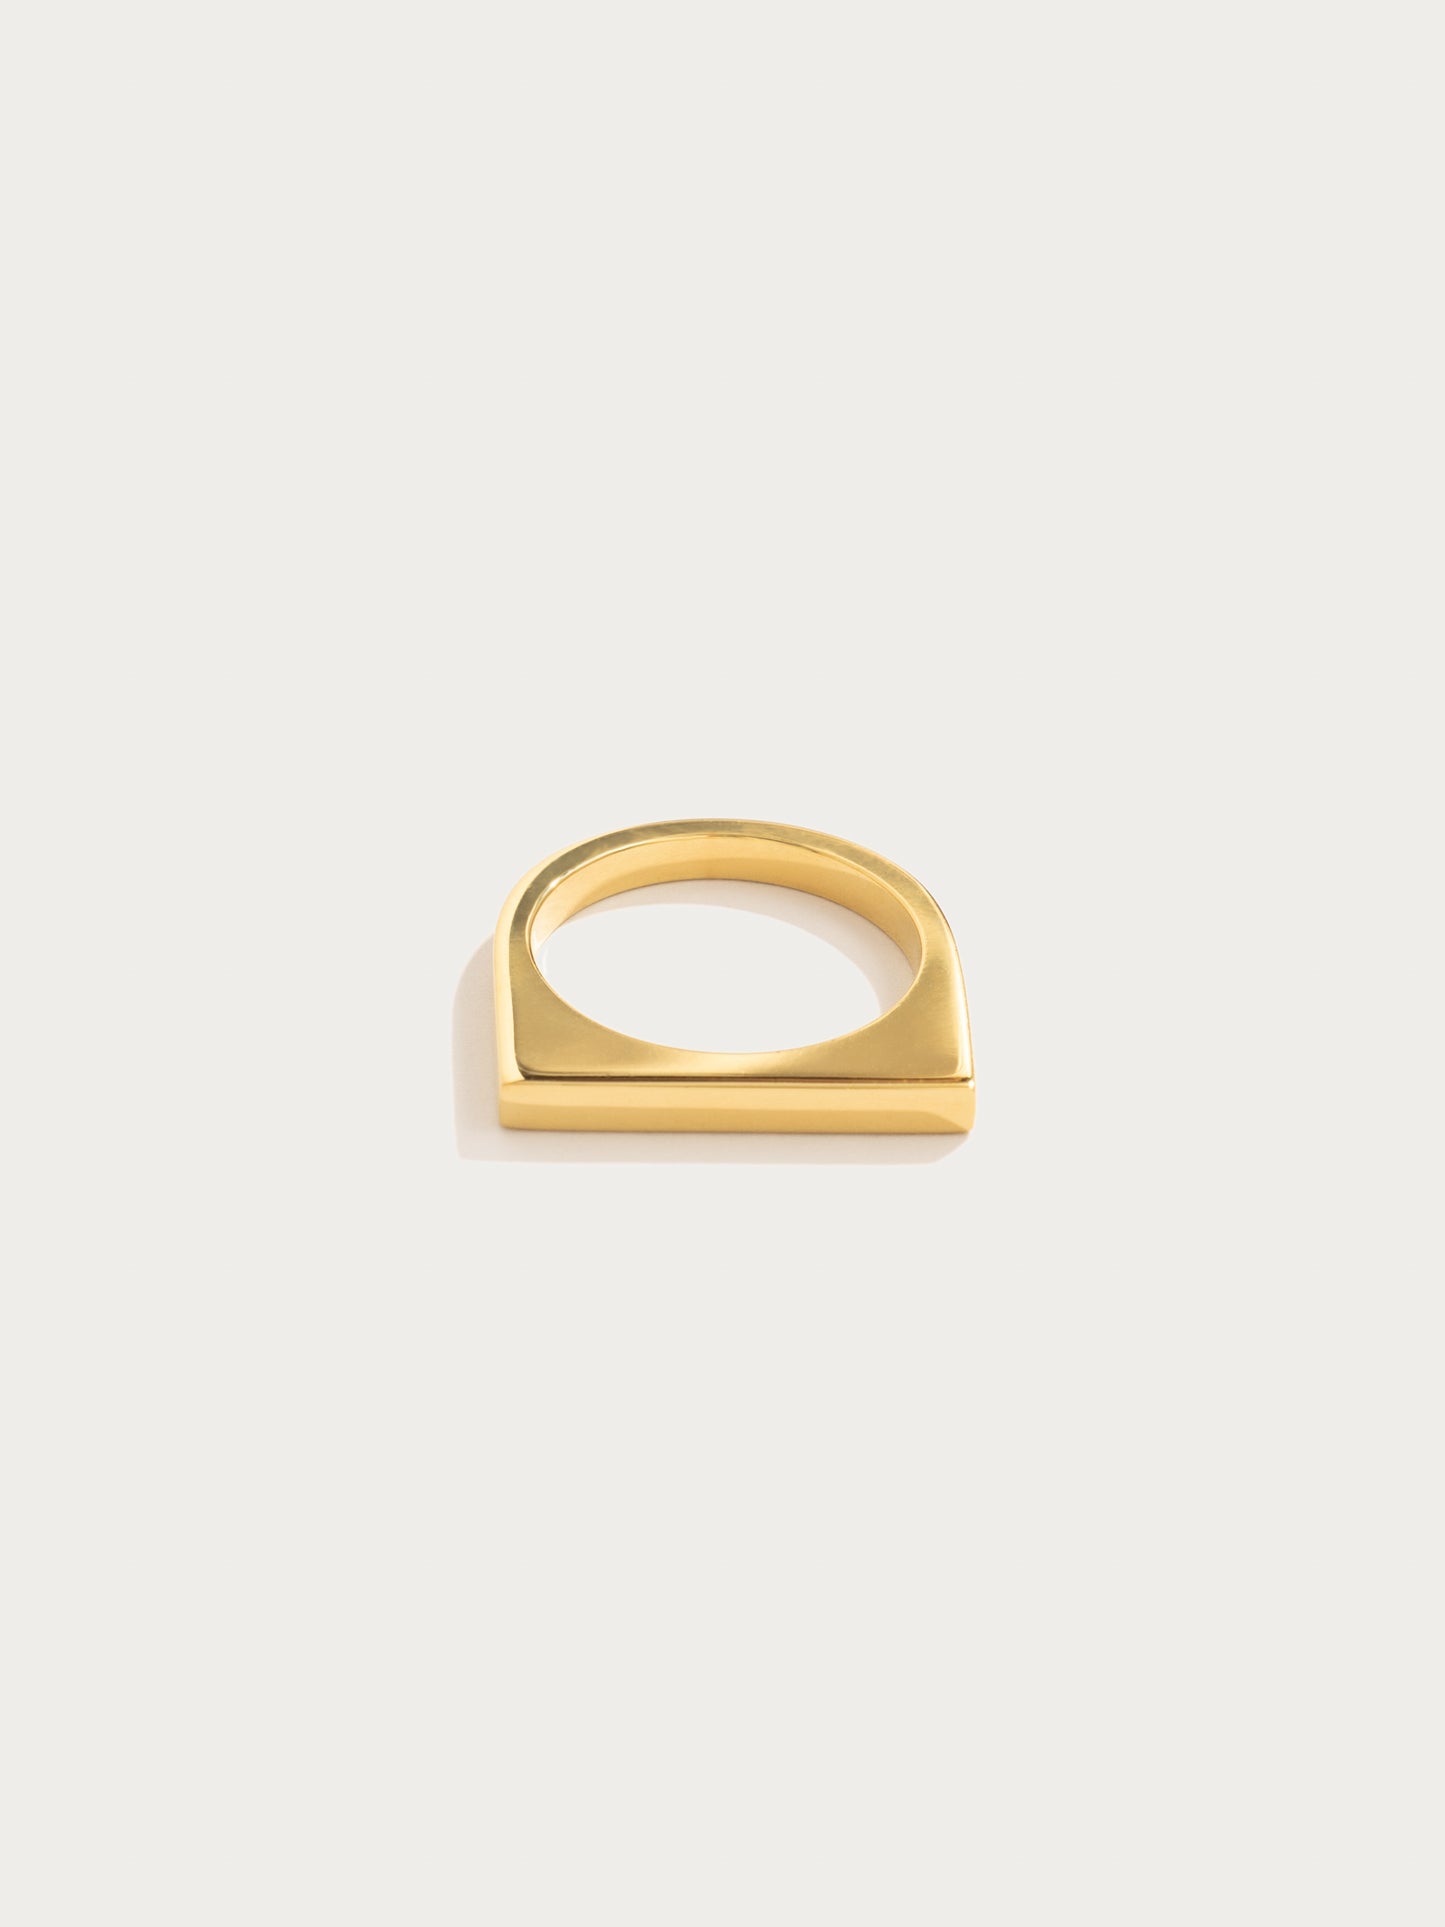 50% OFF Gold Narrow Signet ring